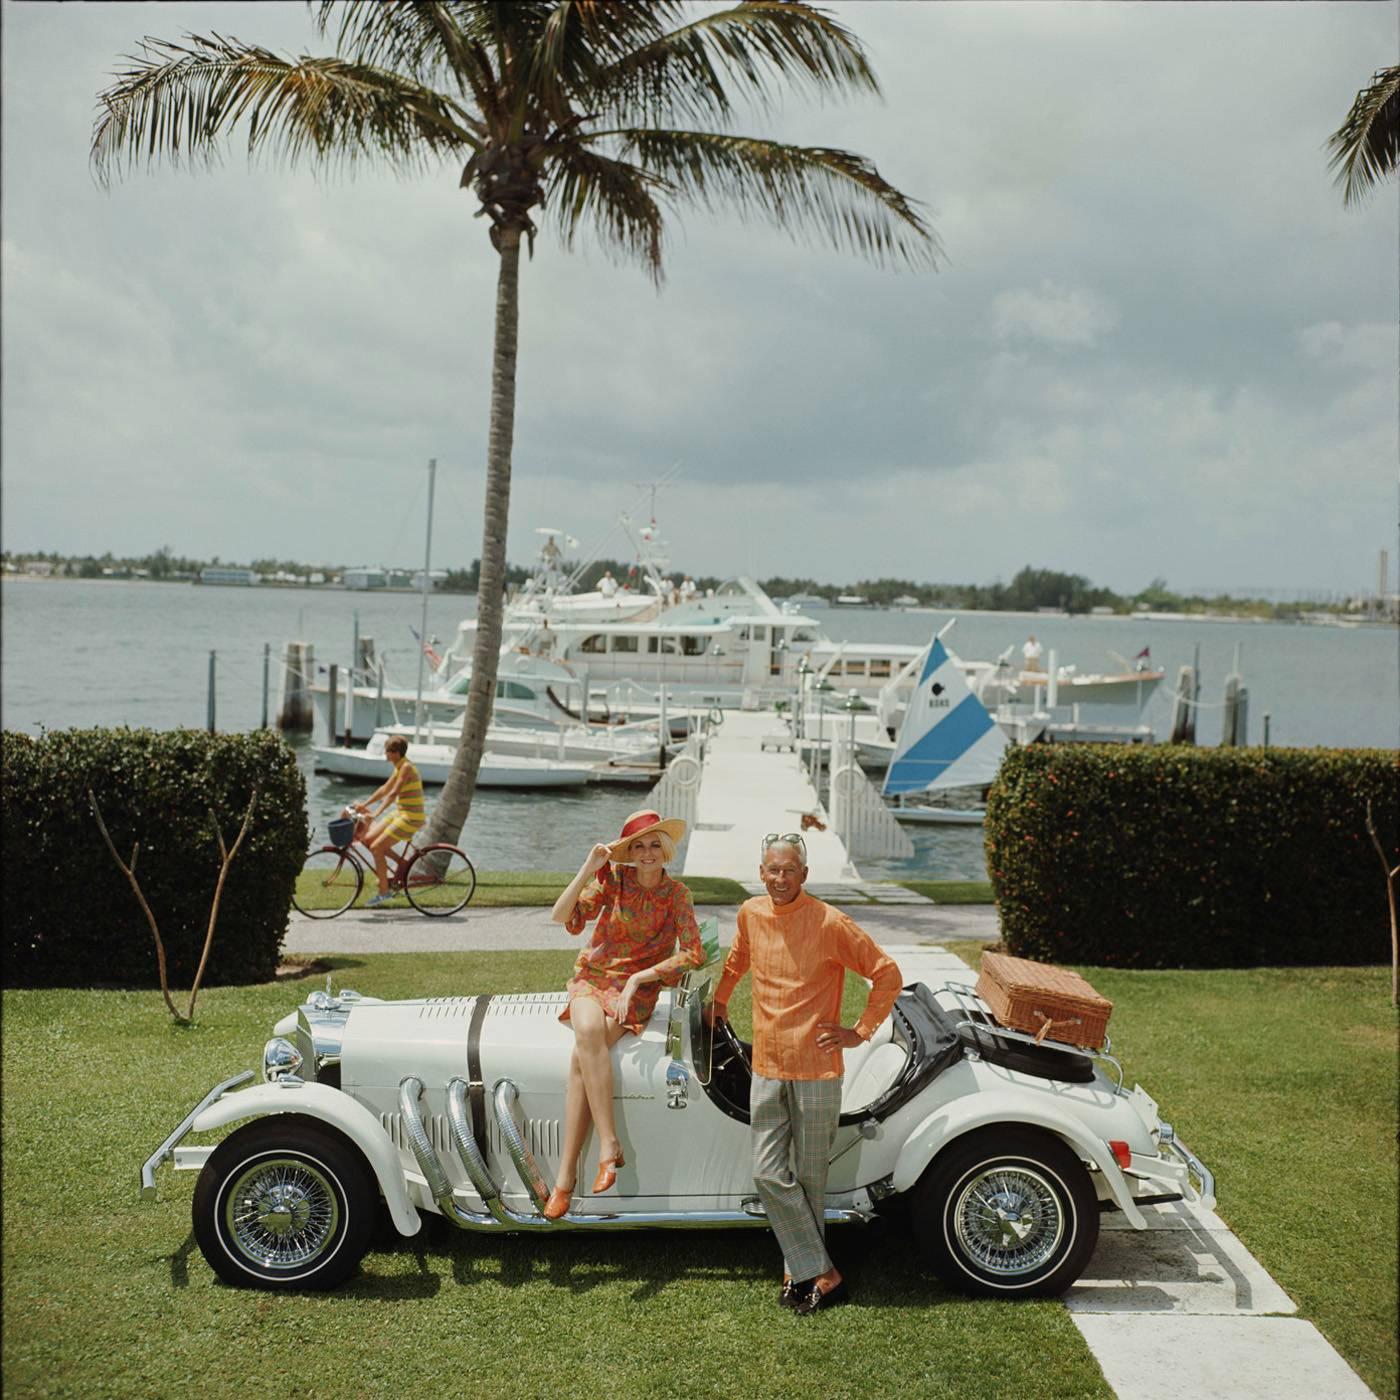 Slim Aarons Color Photograph - All Mine, 1968: Jim Kimberly and his wife beside Lake Worth, Florida